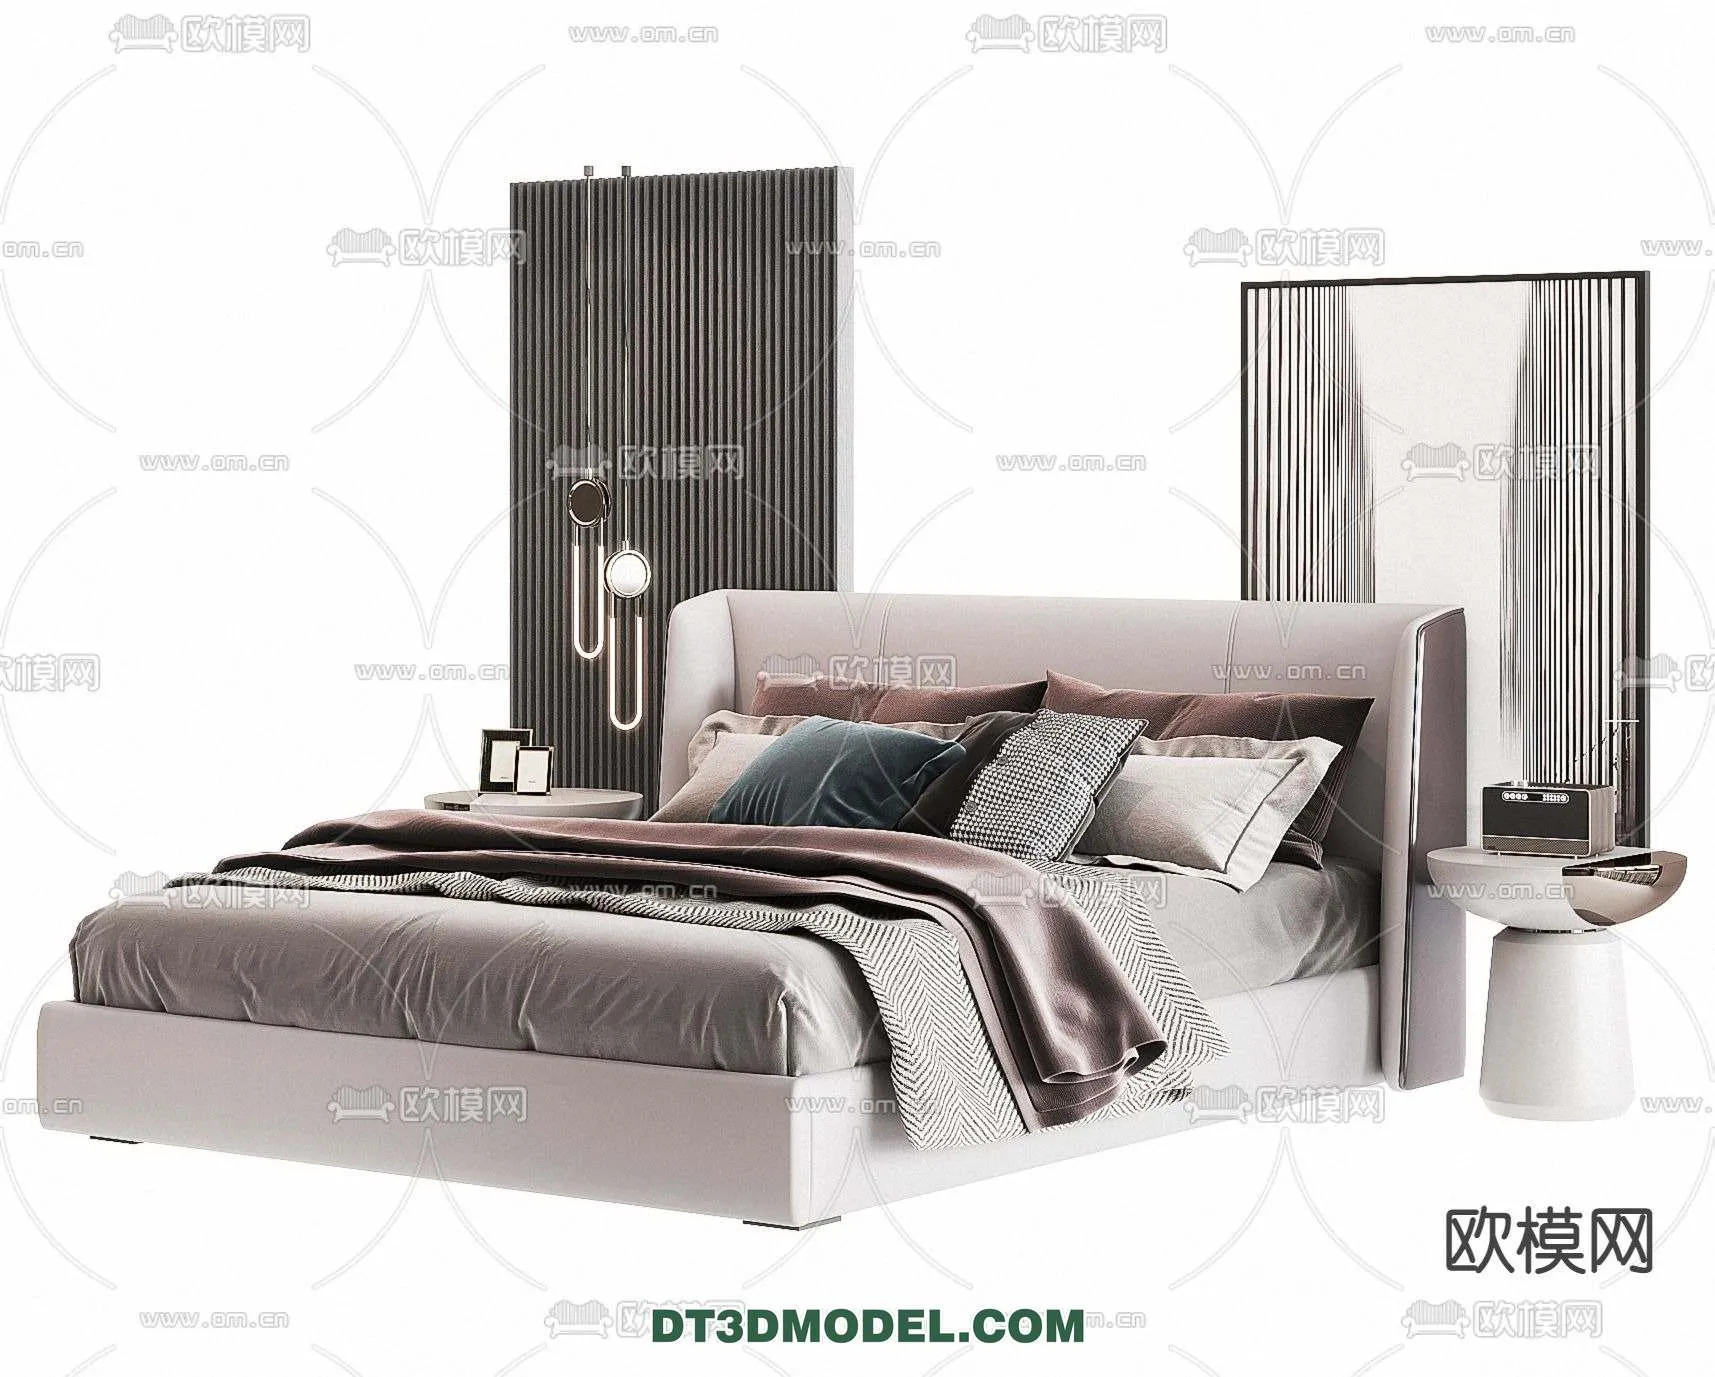 Double Bed 3D Models – 0056